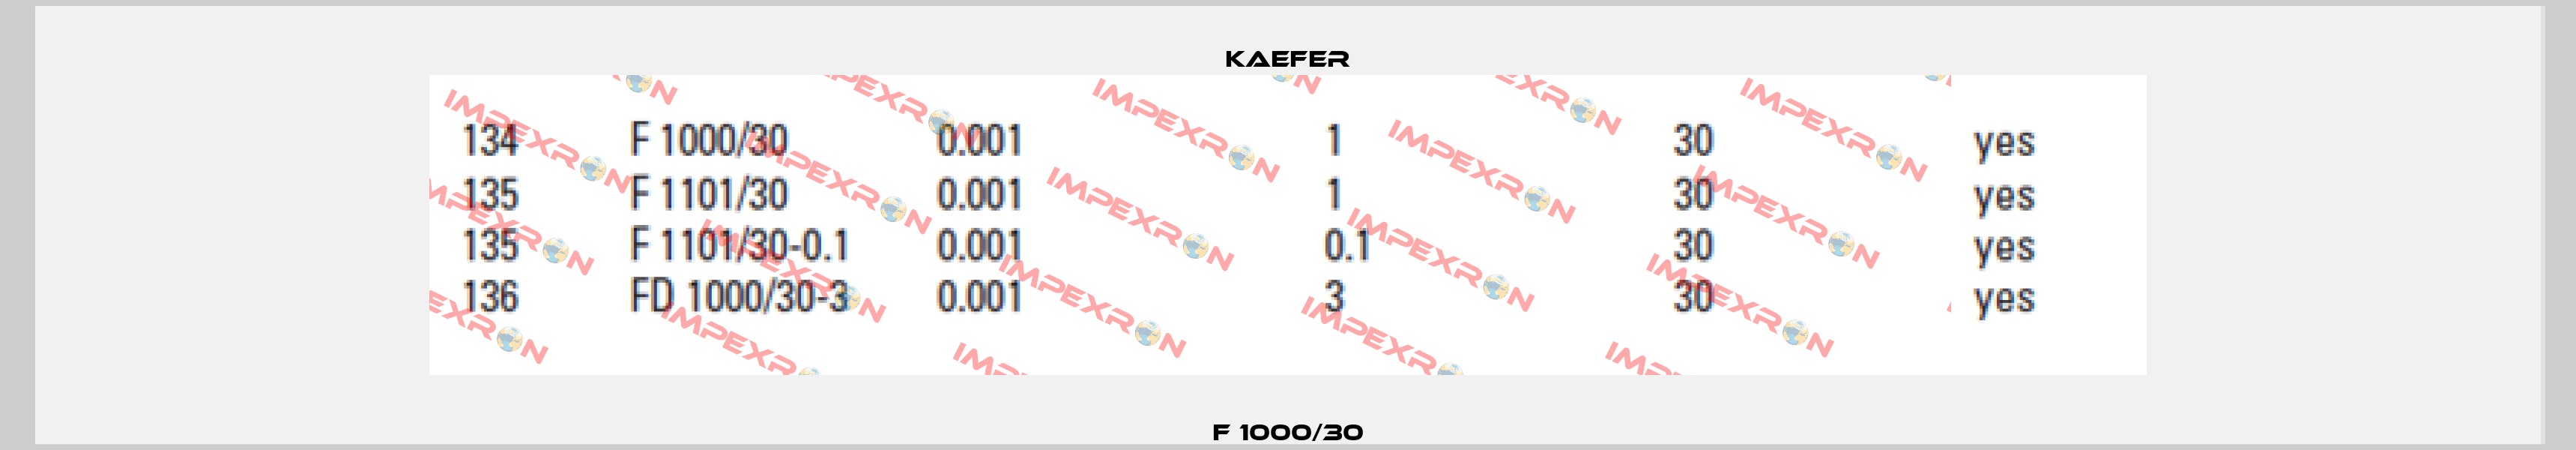 F 1000/30 Kaefer